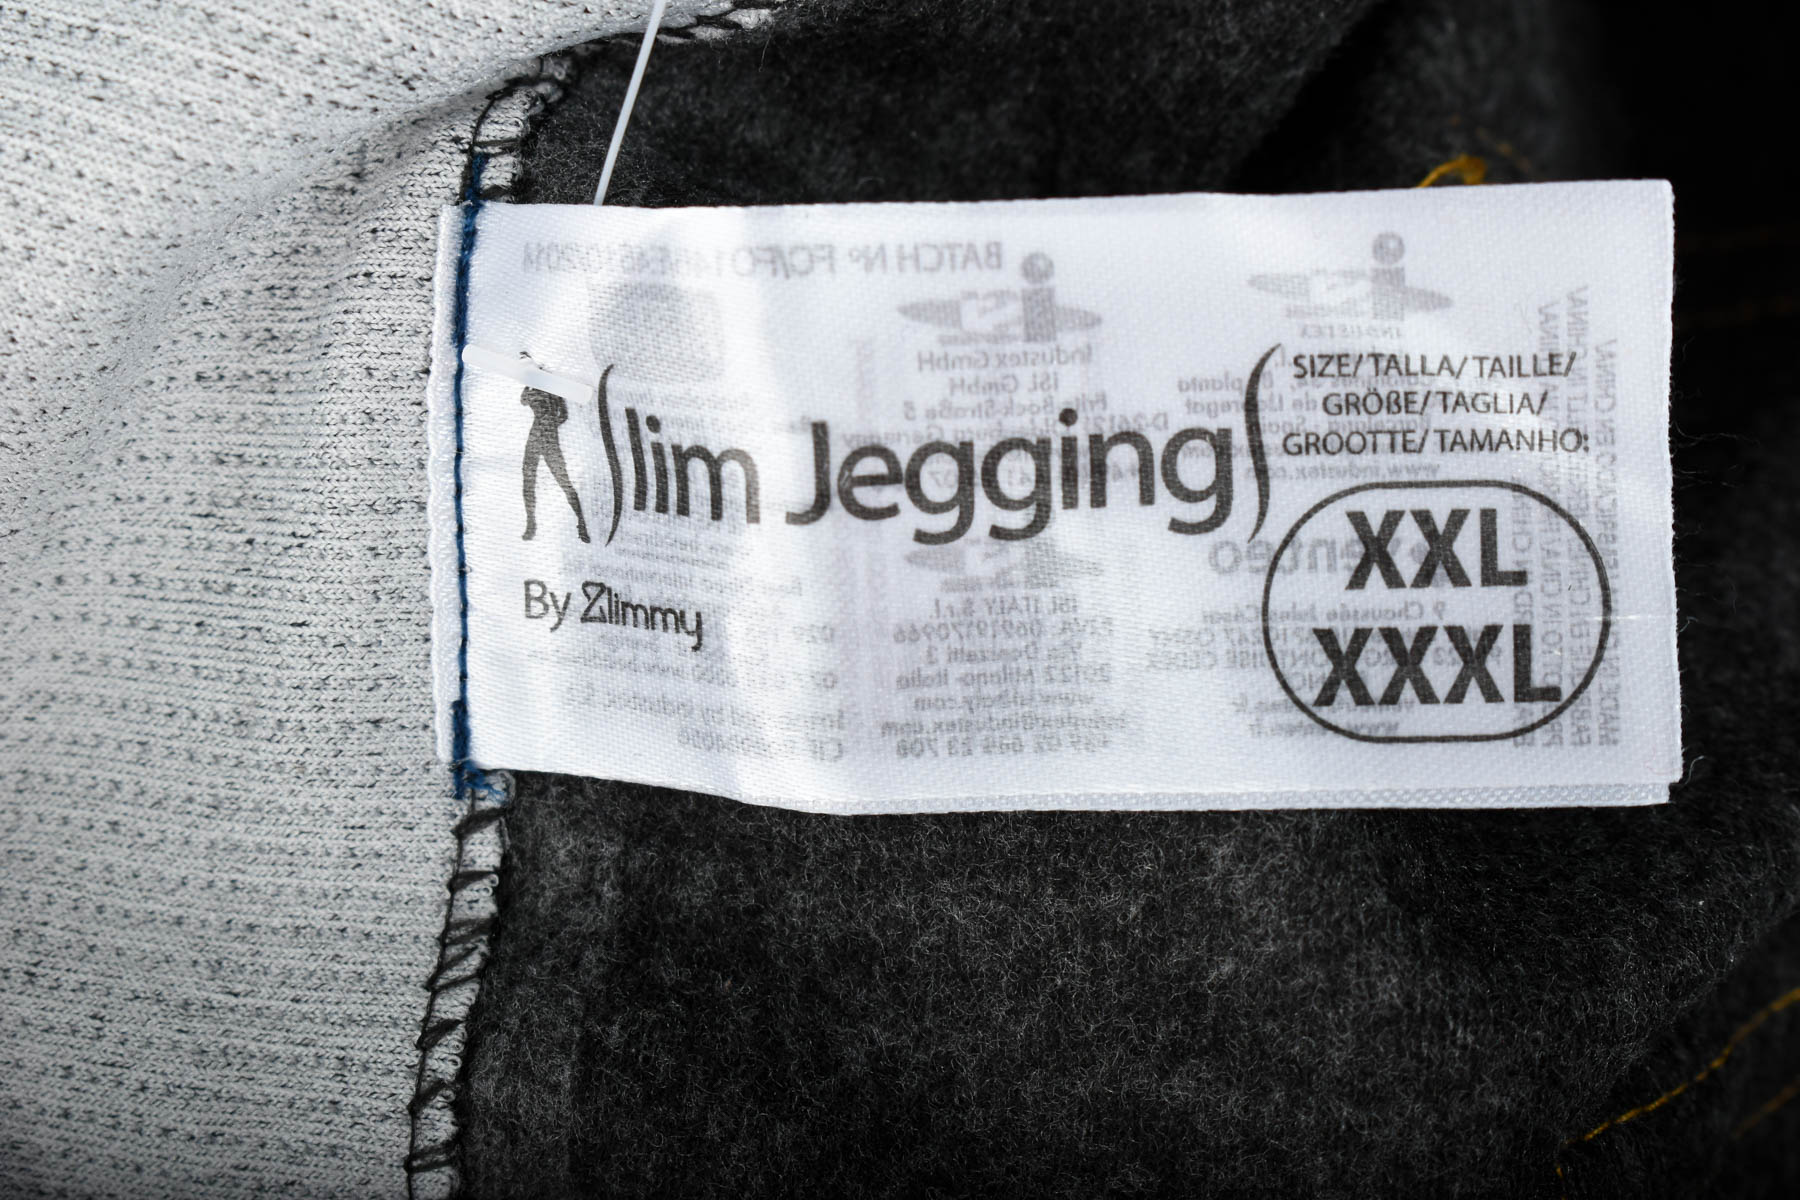 Leggings - Slim Jegging By Zlimmy - 2